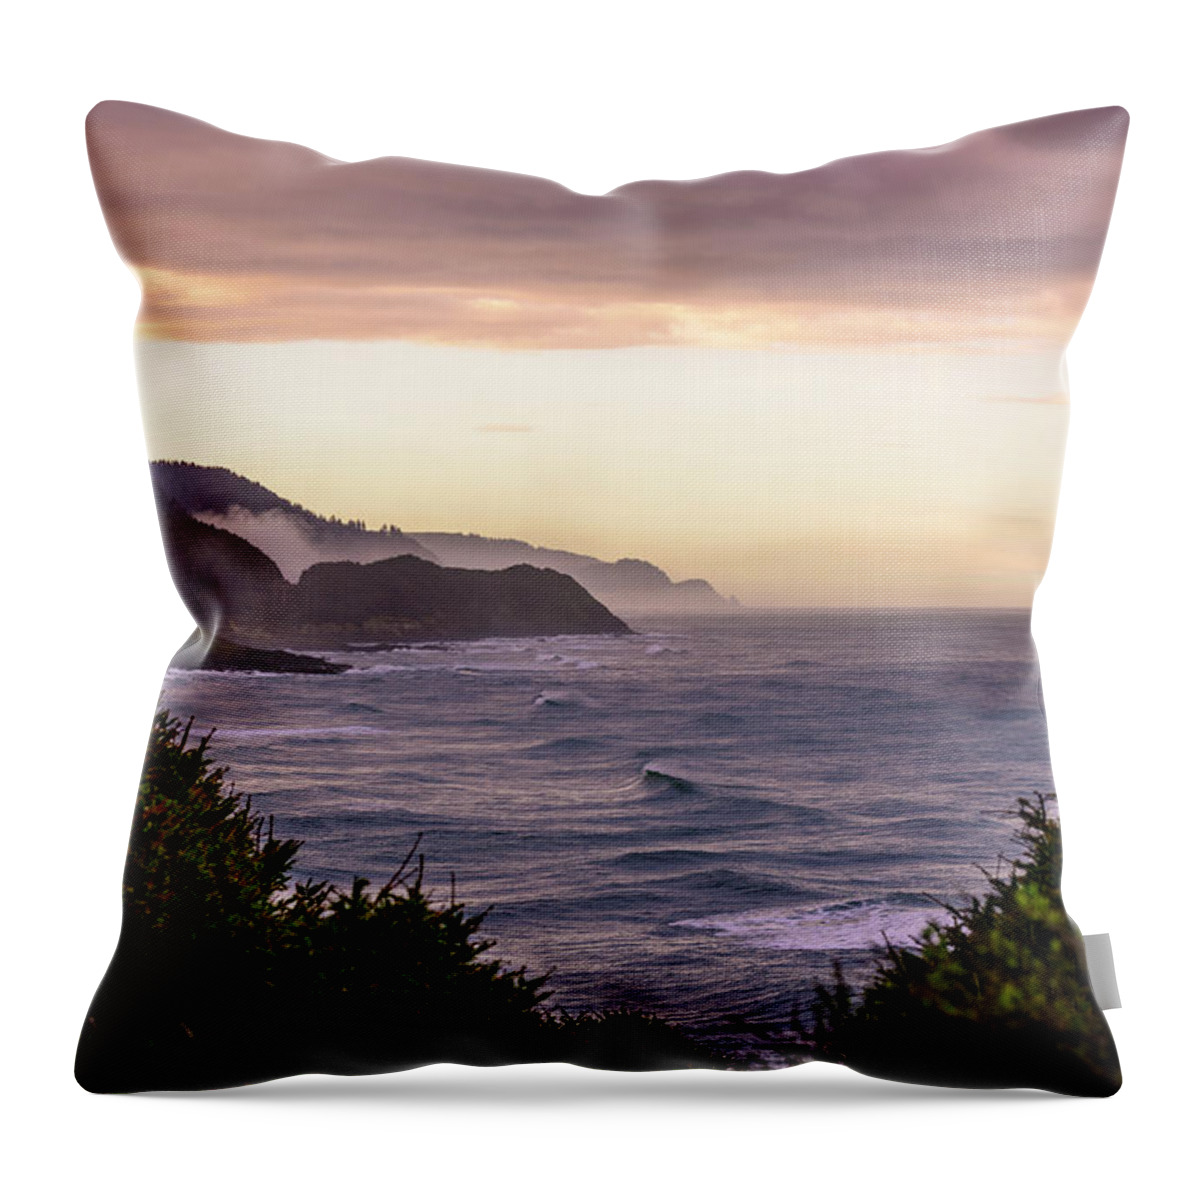  Throw Pillow featuring the photograph Cape Perpetua, Oregon coast by Bryan Xavier